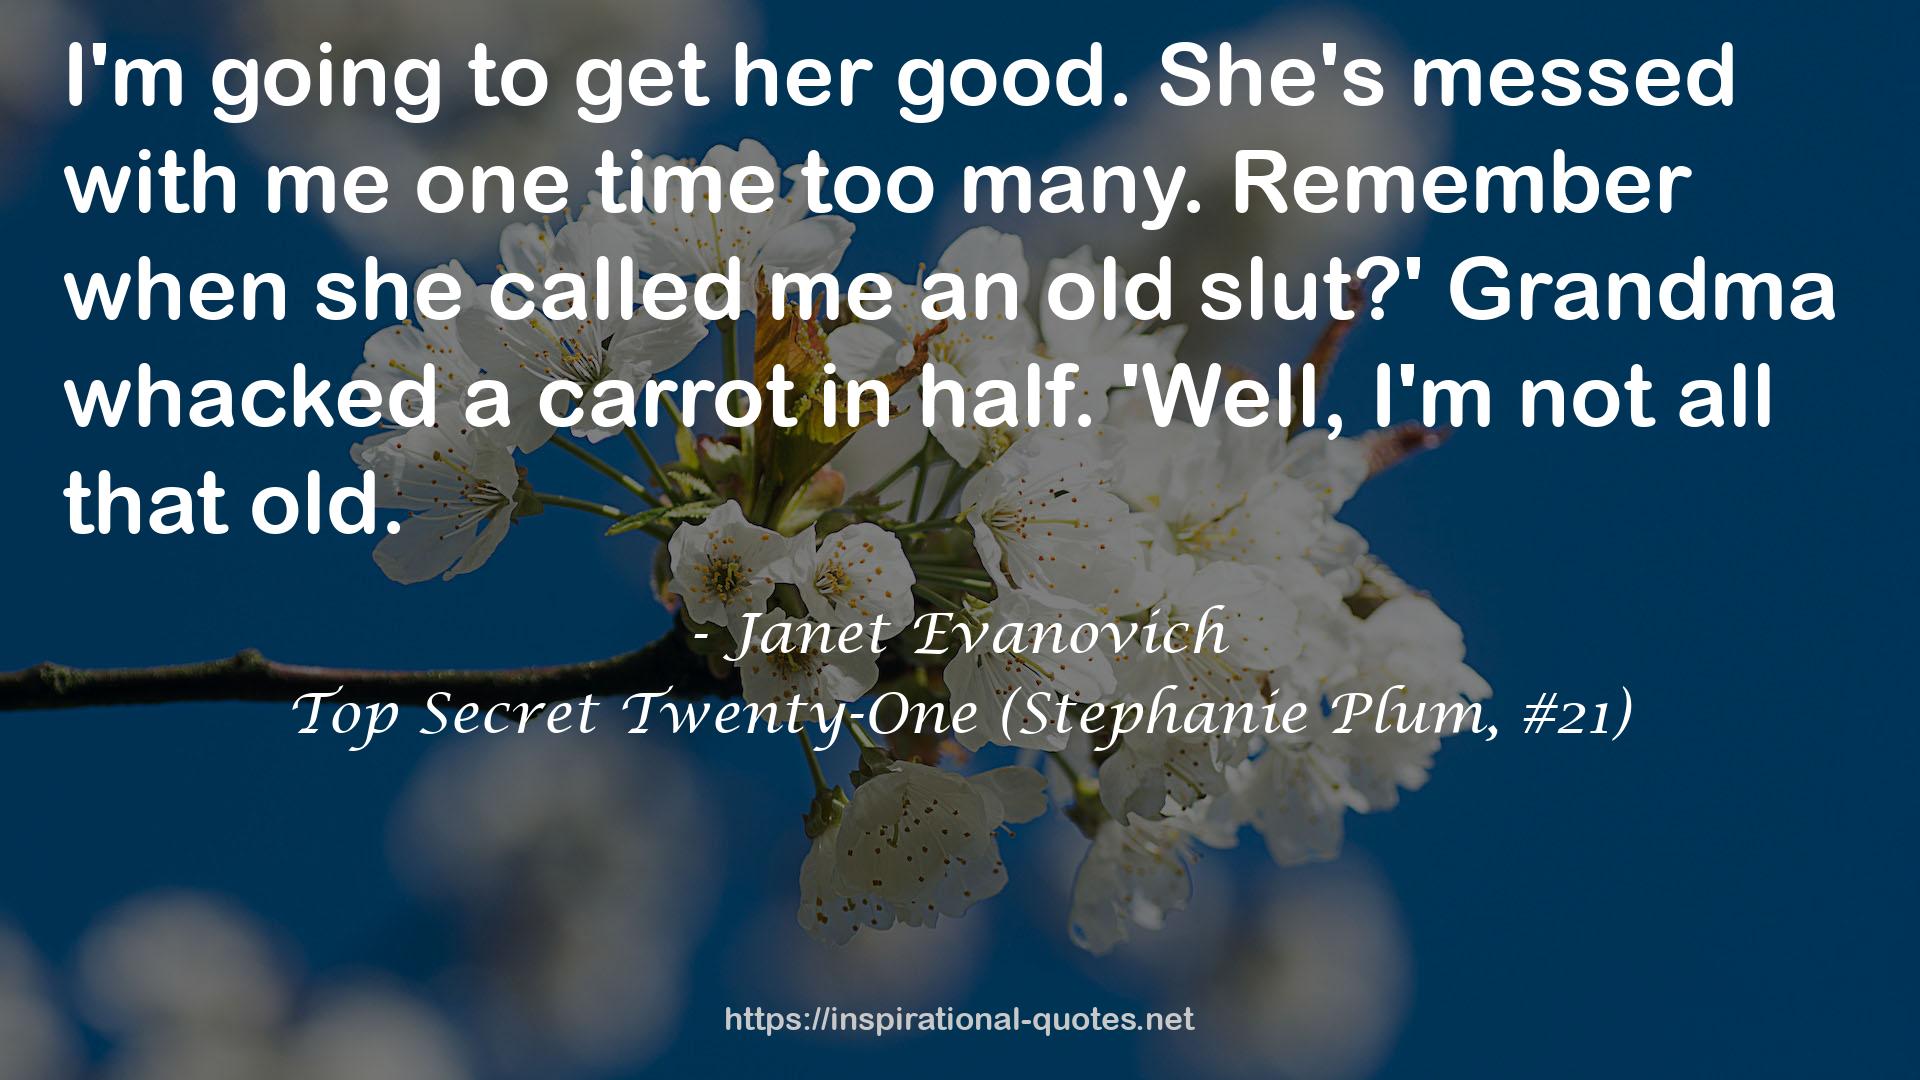 Top Secret Twenty-One (Stephanie Plum, #21) QUOTES